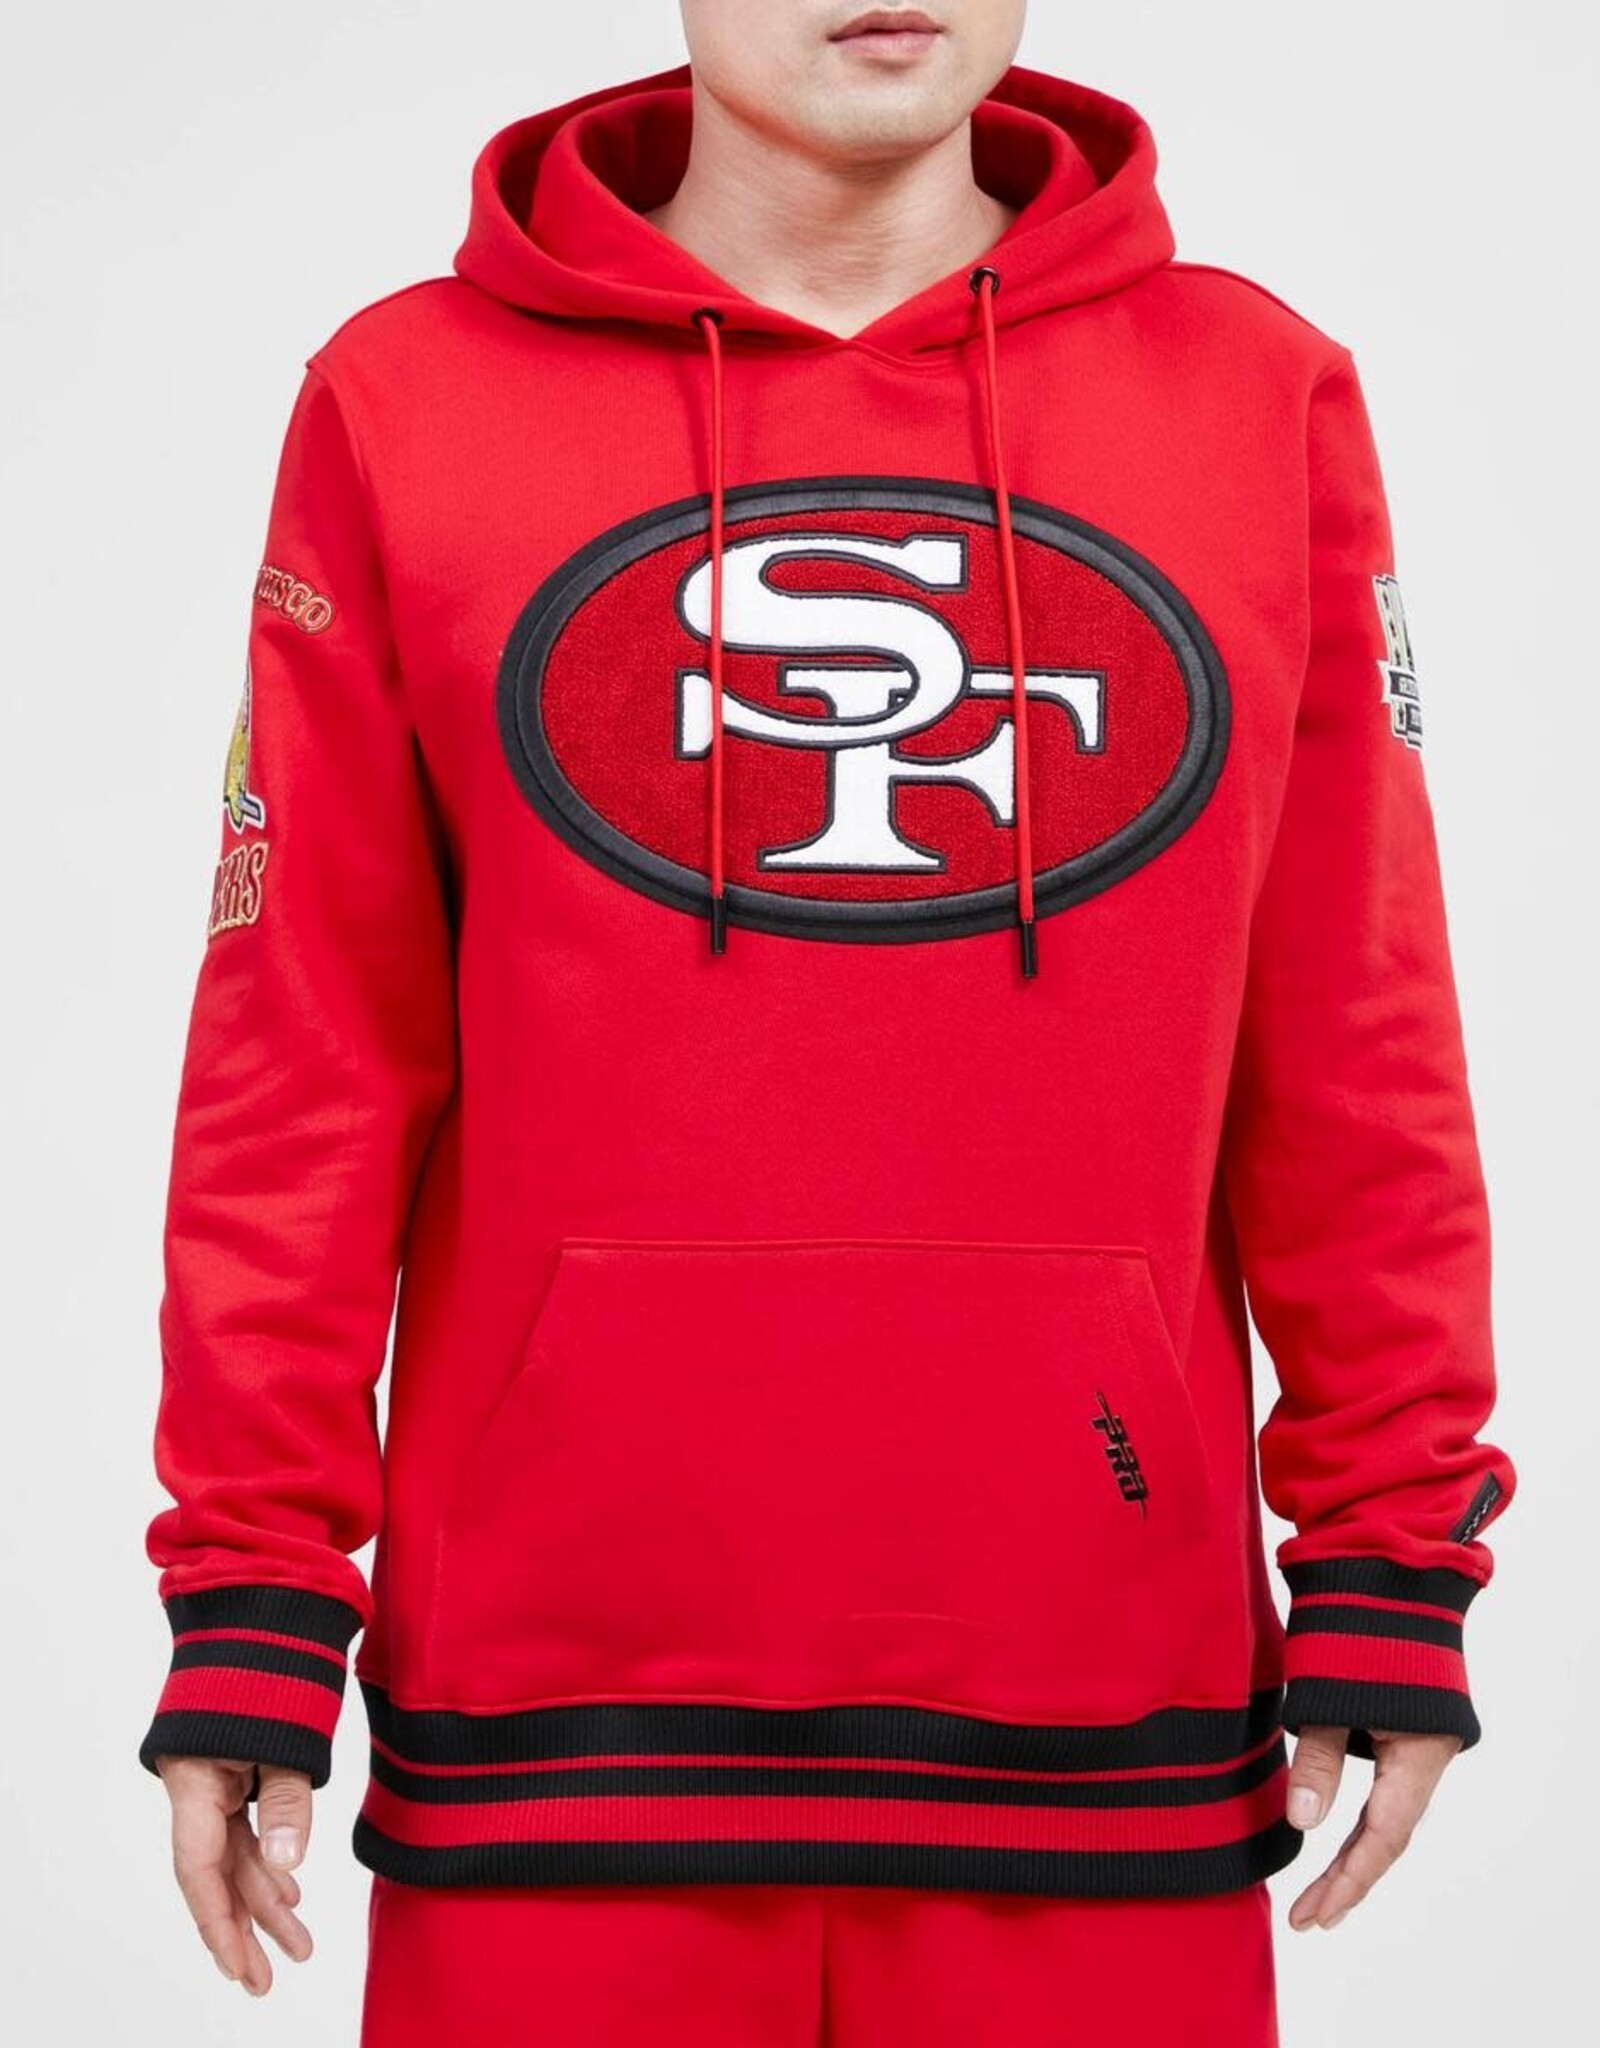 Pro Standard San Francisco 49ers Men's Retro Classic Fleece Pullover Hoodie - Red